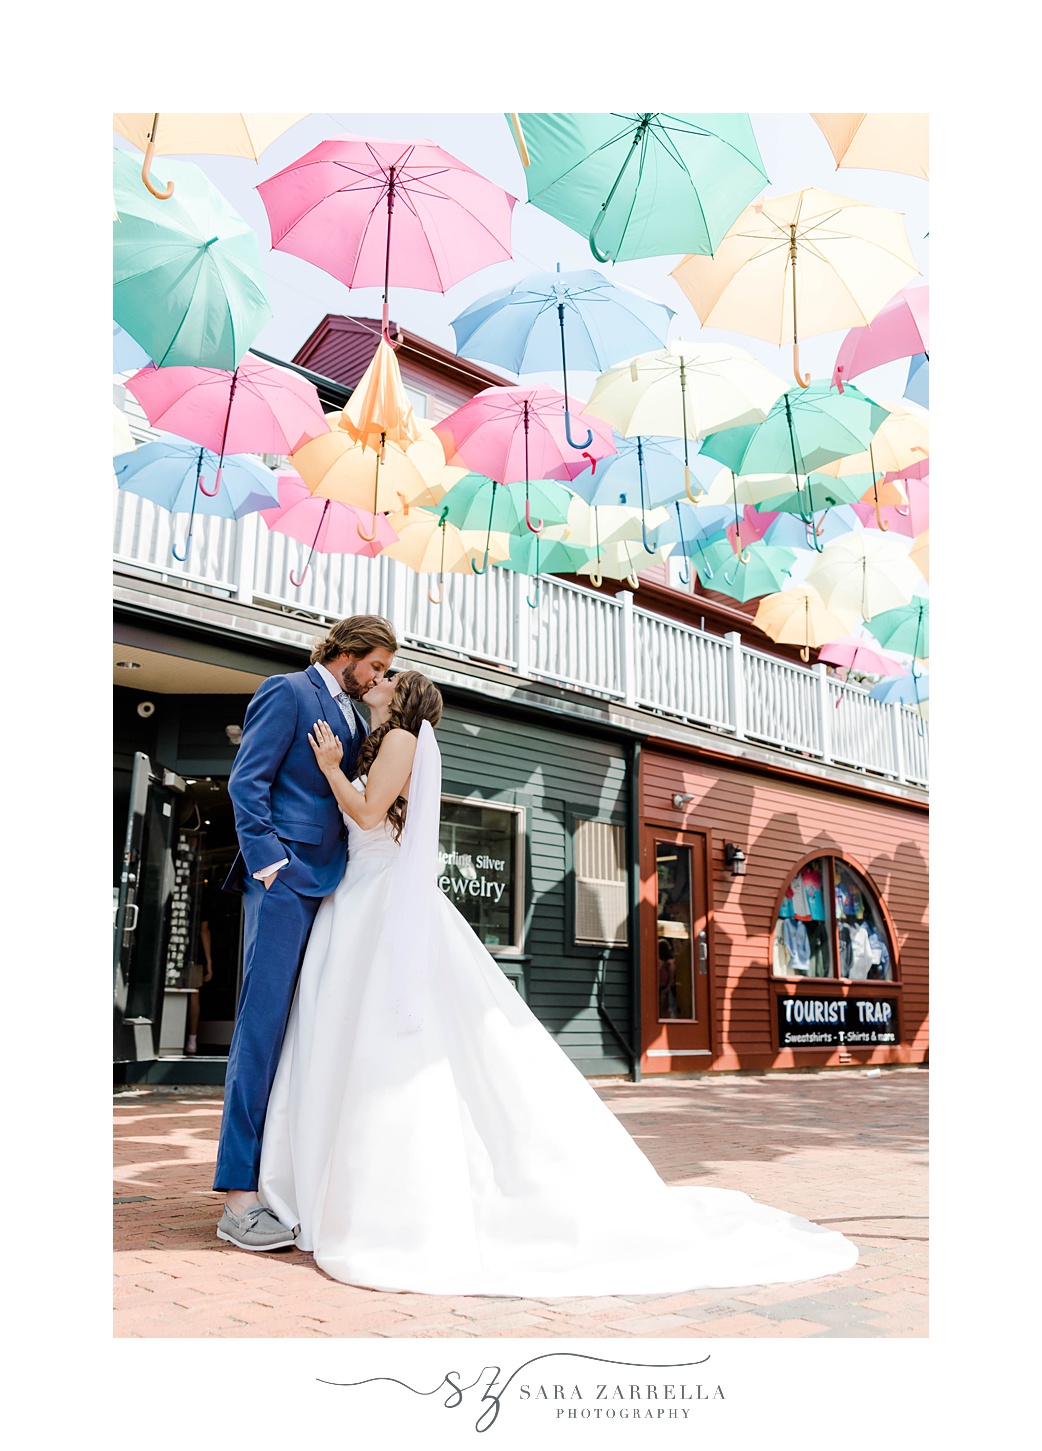 newlyweds hug under umbrellas in Market Square 